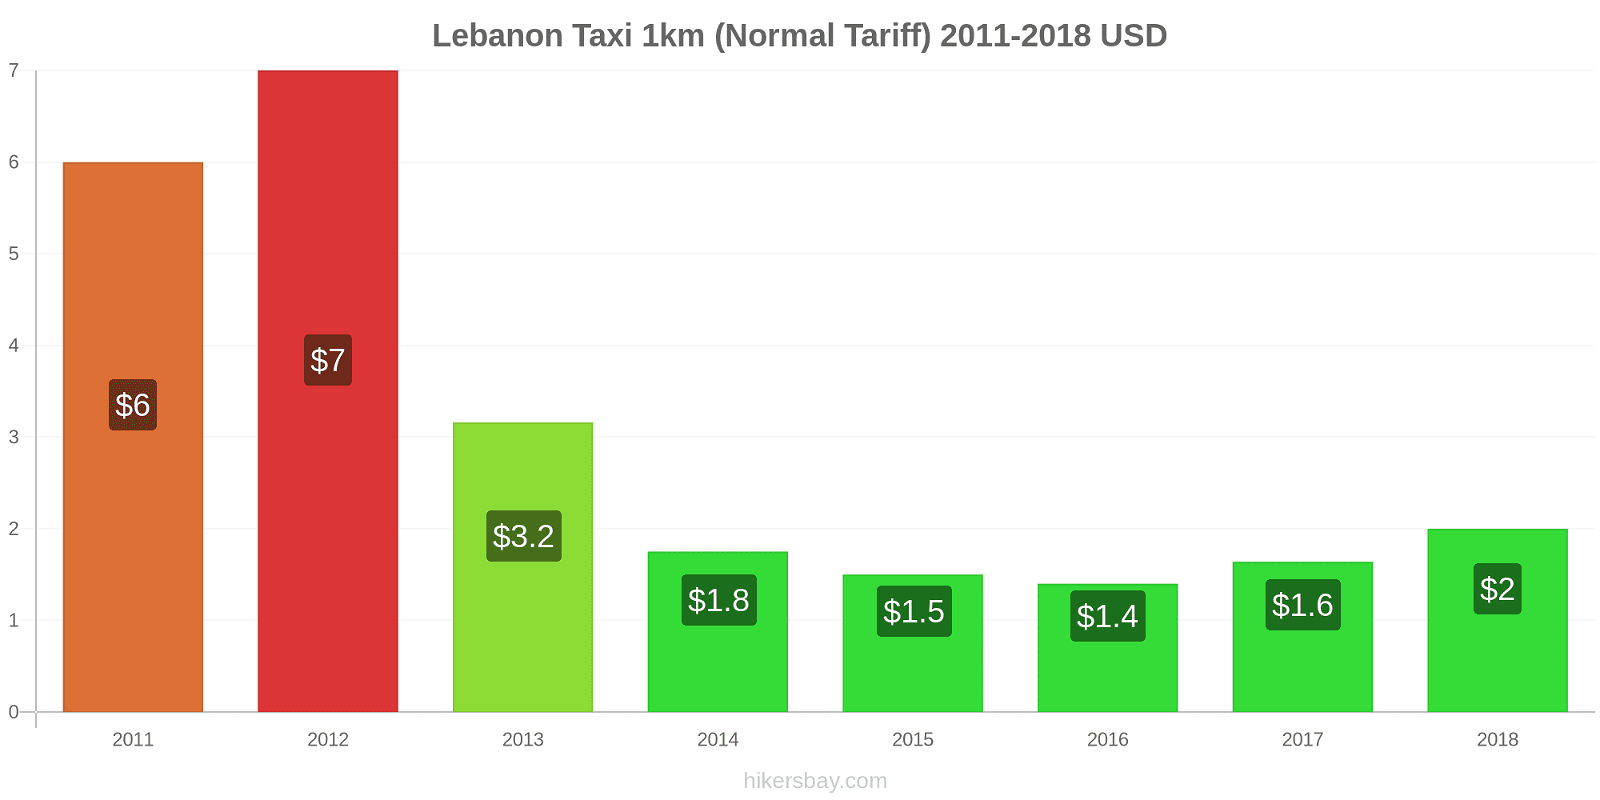 Lebanon price changes Taxi 1km (Normal Tariff) hikersbay.com